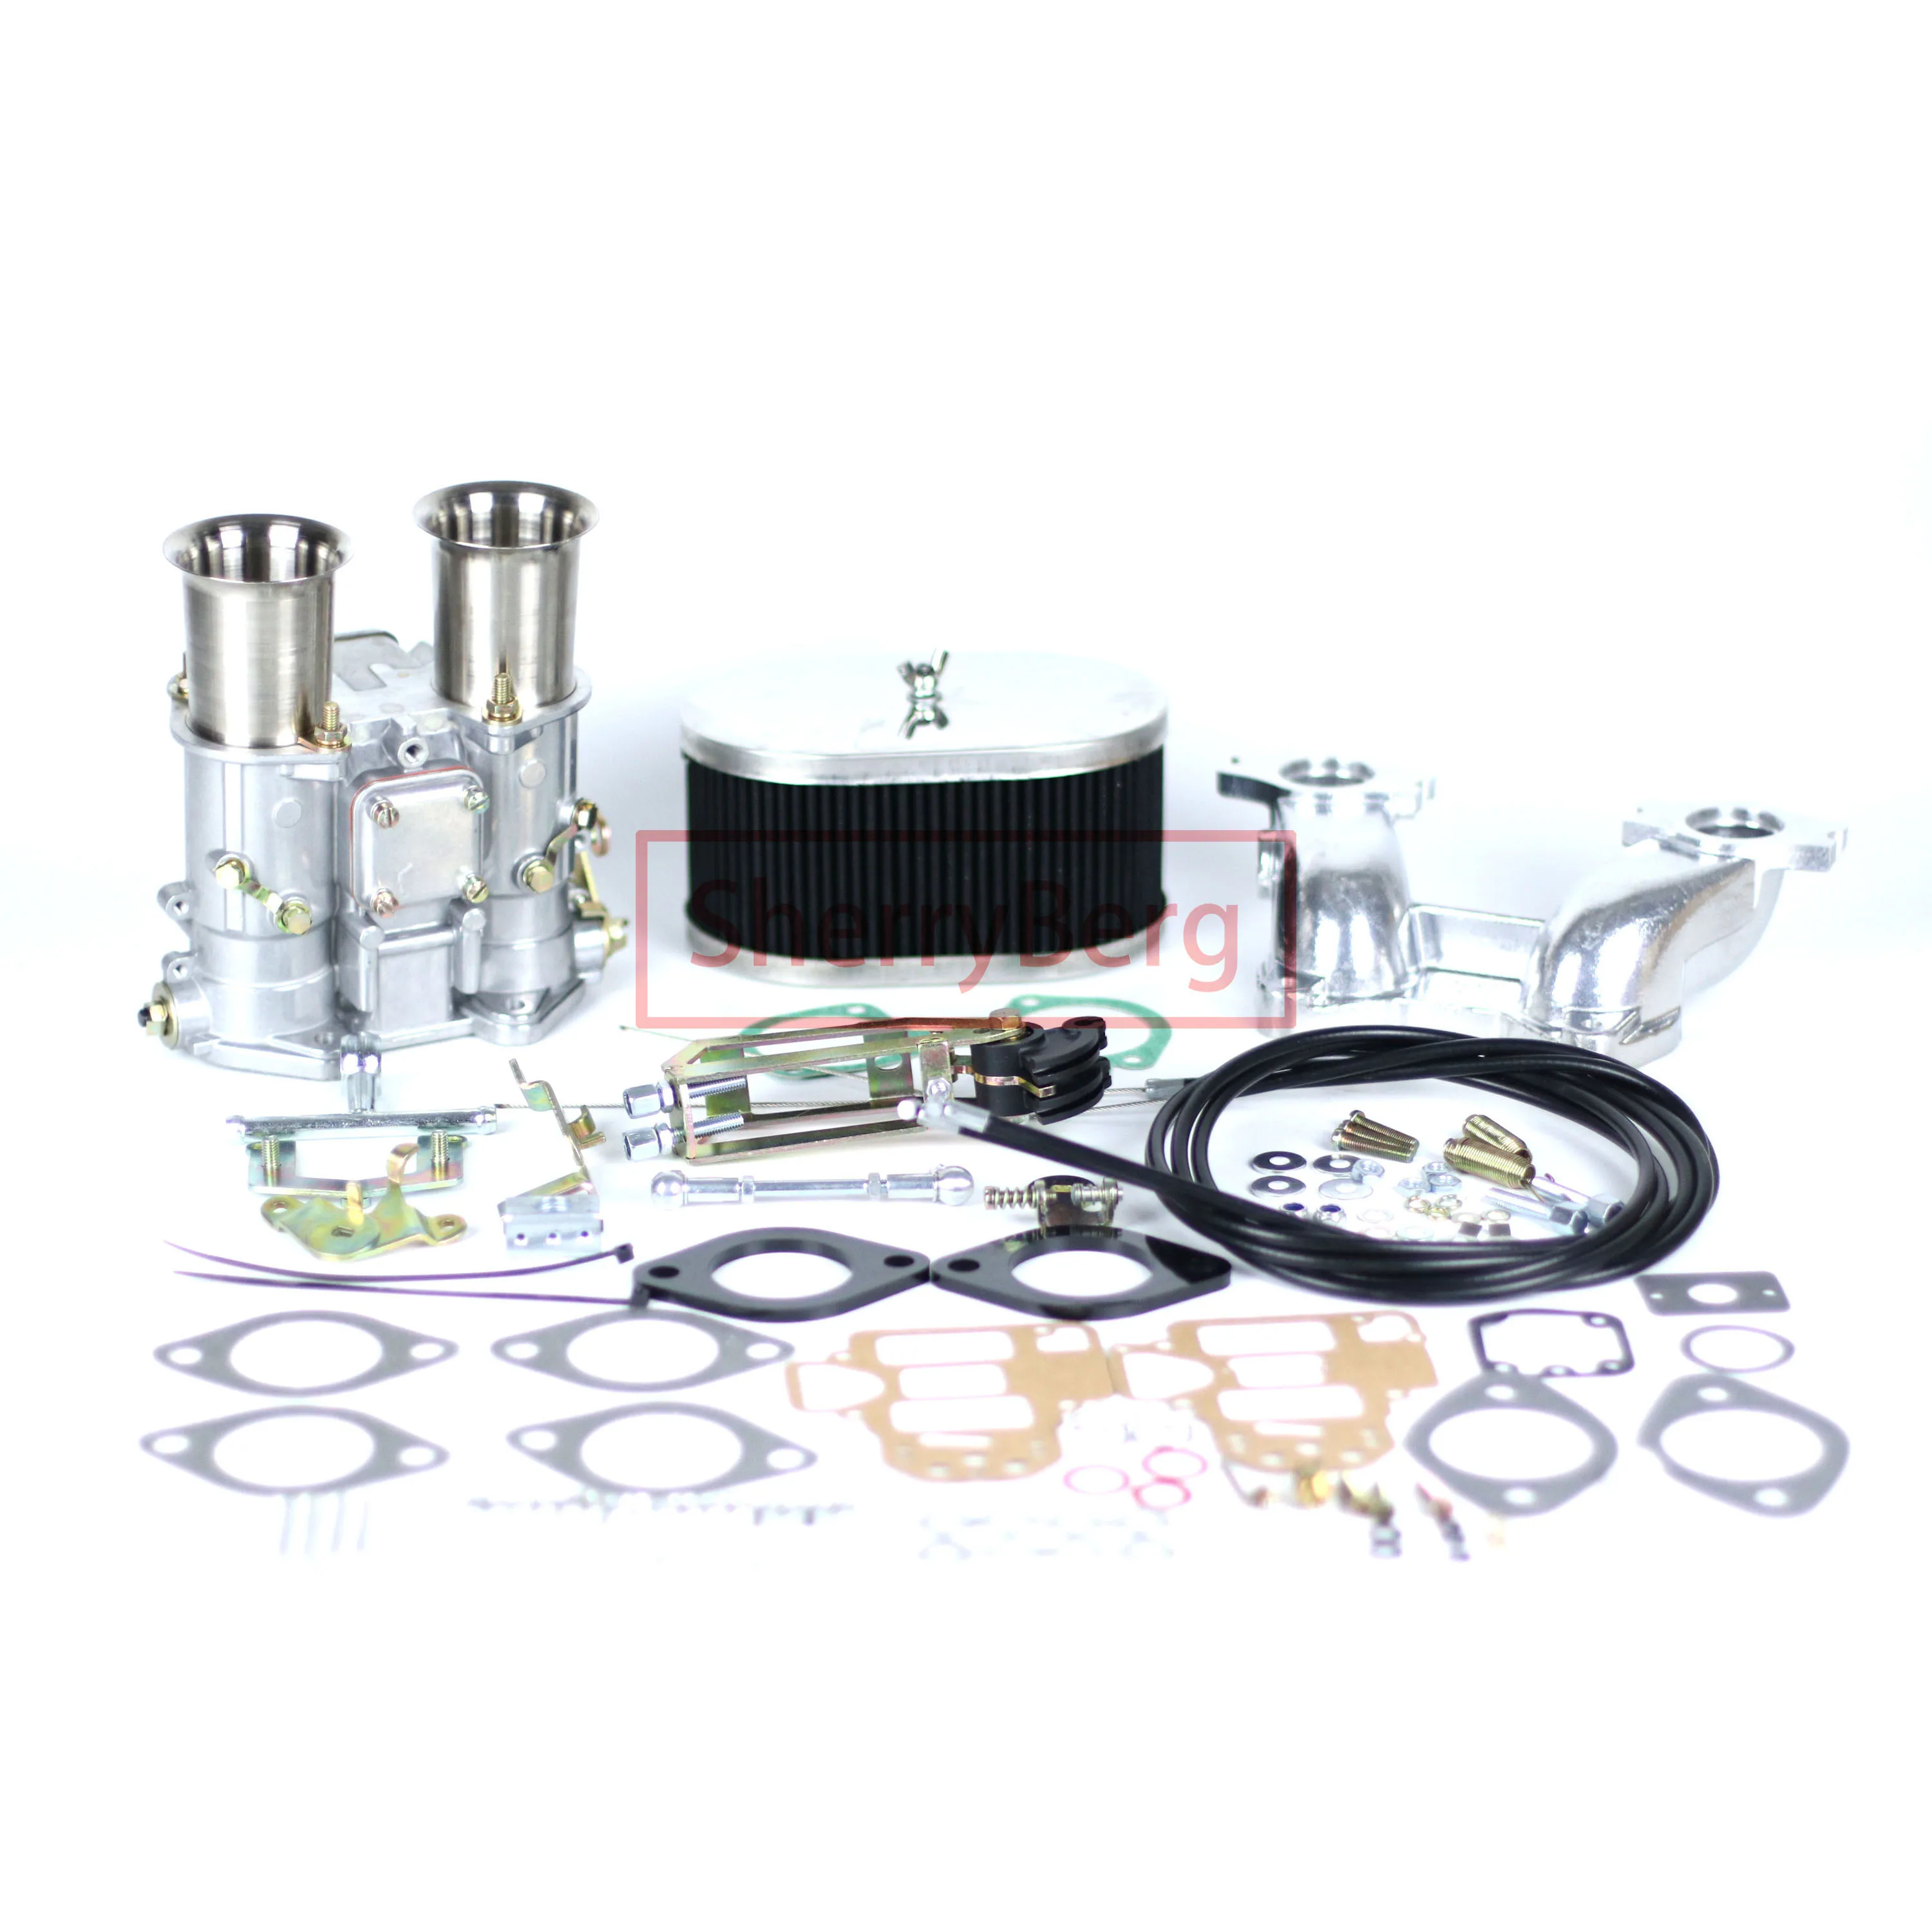 

SherryBer Carb MANIFOLD Linkage Filter 45dcoe 45mm Carburetor Conversion Kit for MINI COOPER WEBER/DELLORTO EMPI 45 DCOE/DHLA